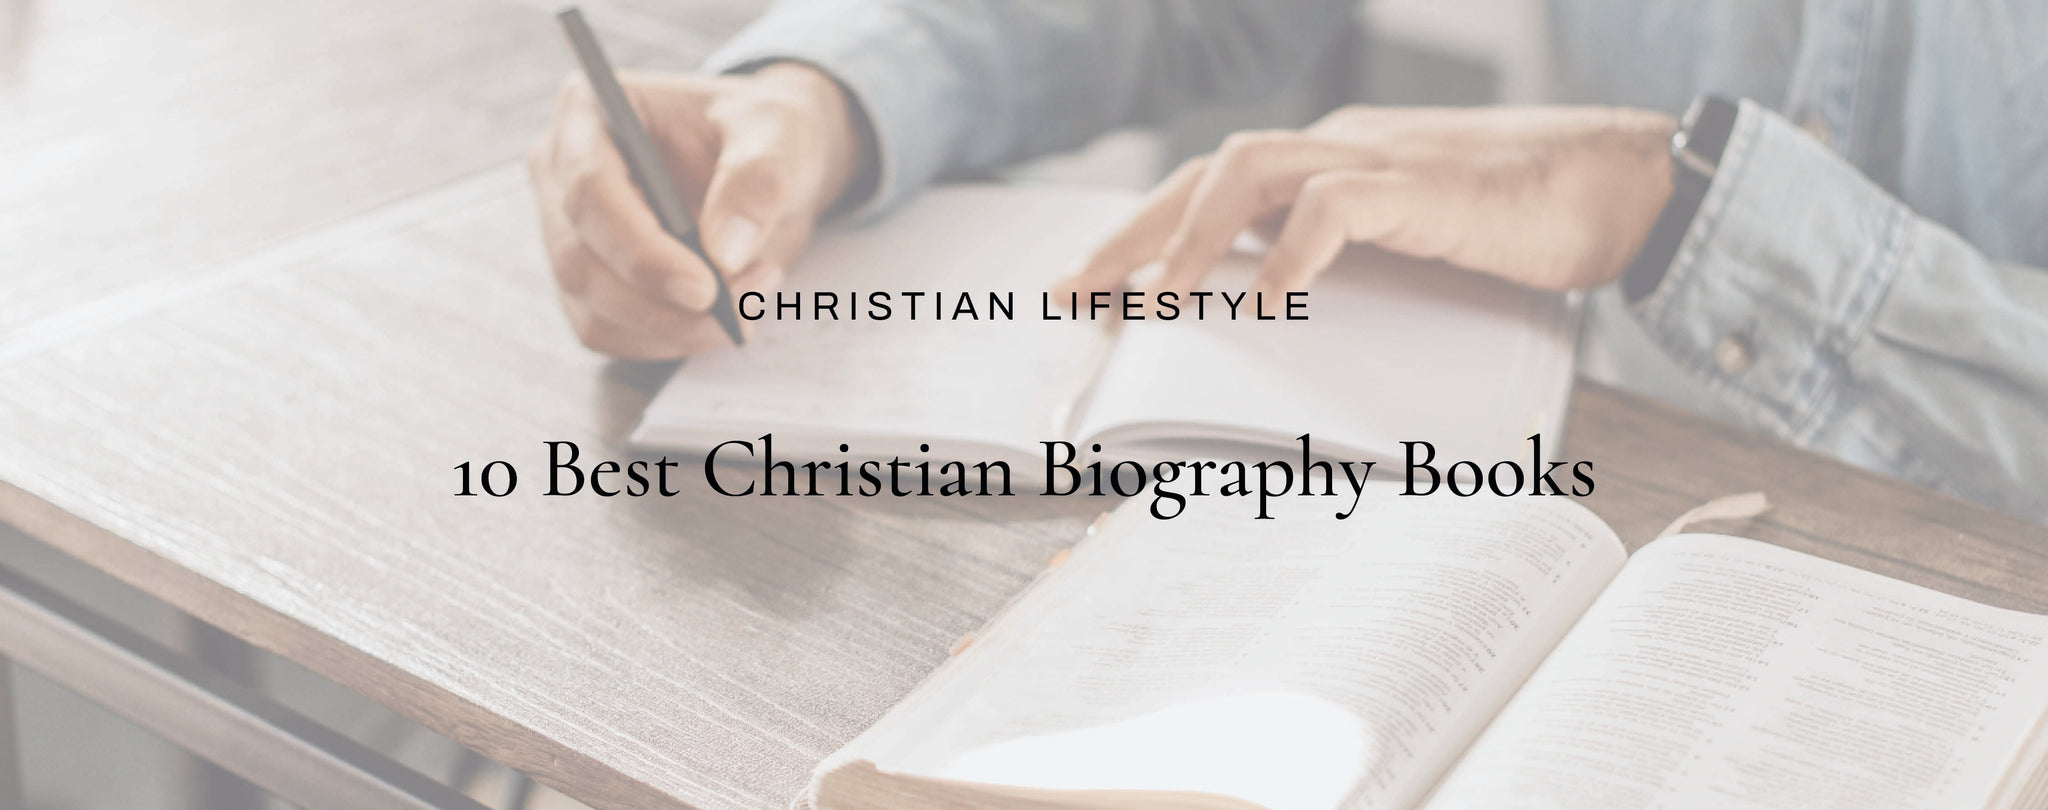 10 Best Christian Biography Books